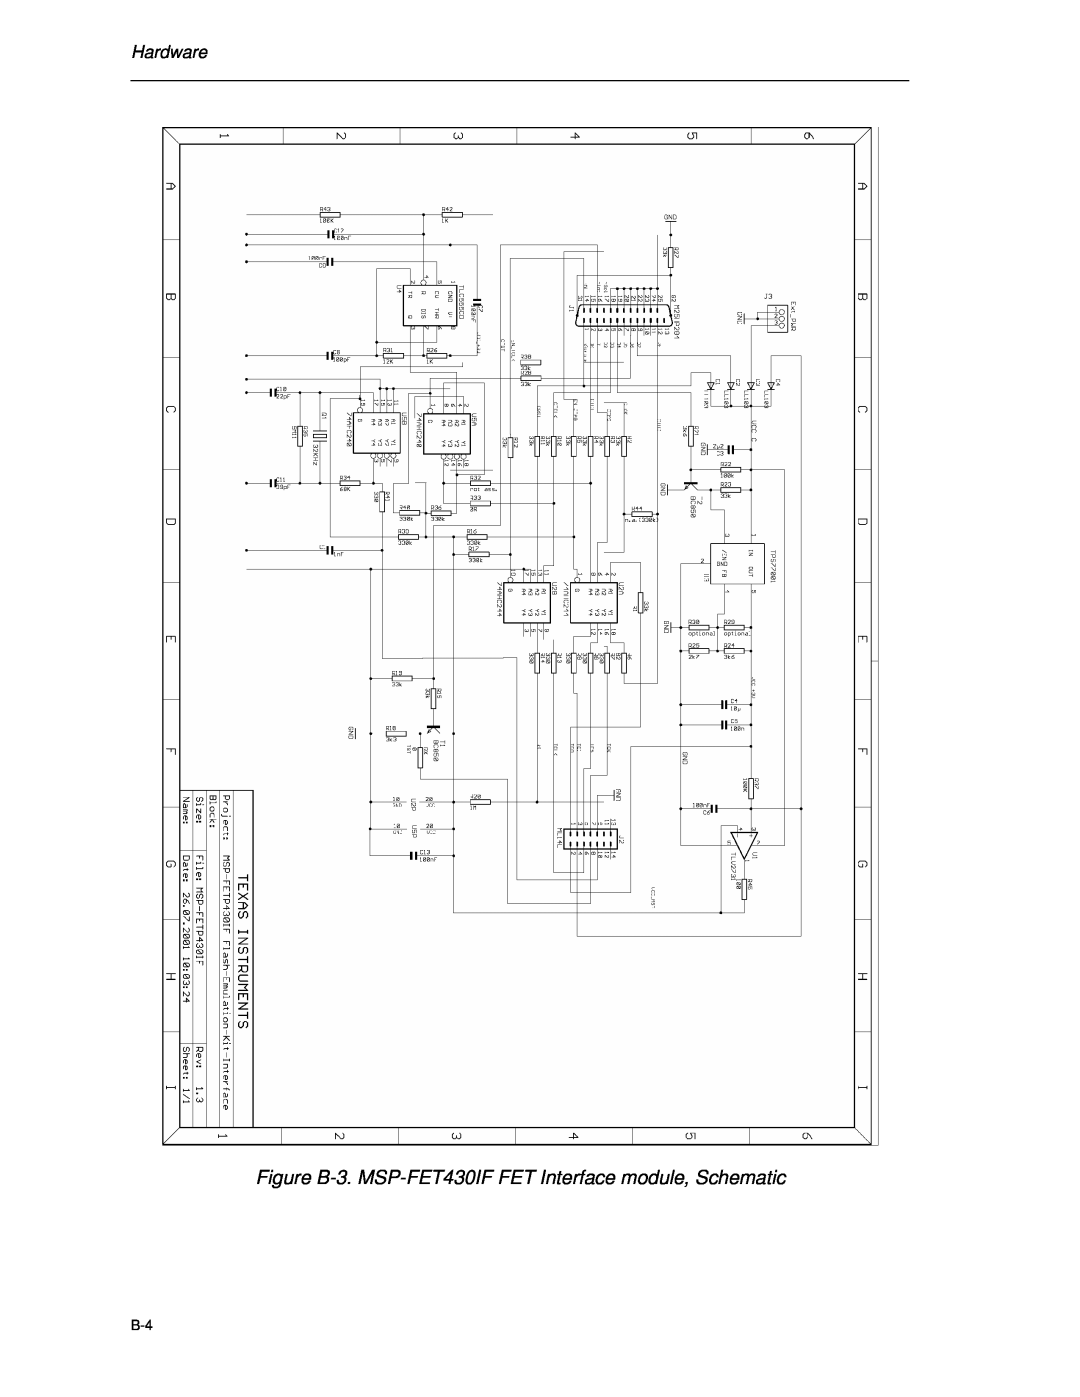 Texas Instruments manual Figure B-3. MSP-FET430IF FET Interface module, Schematic, Hardware 